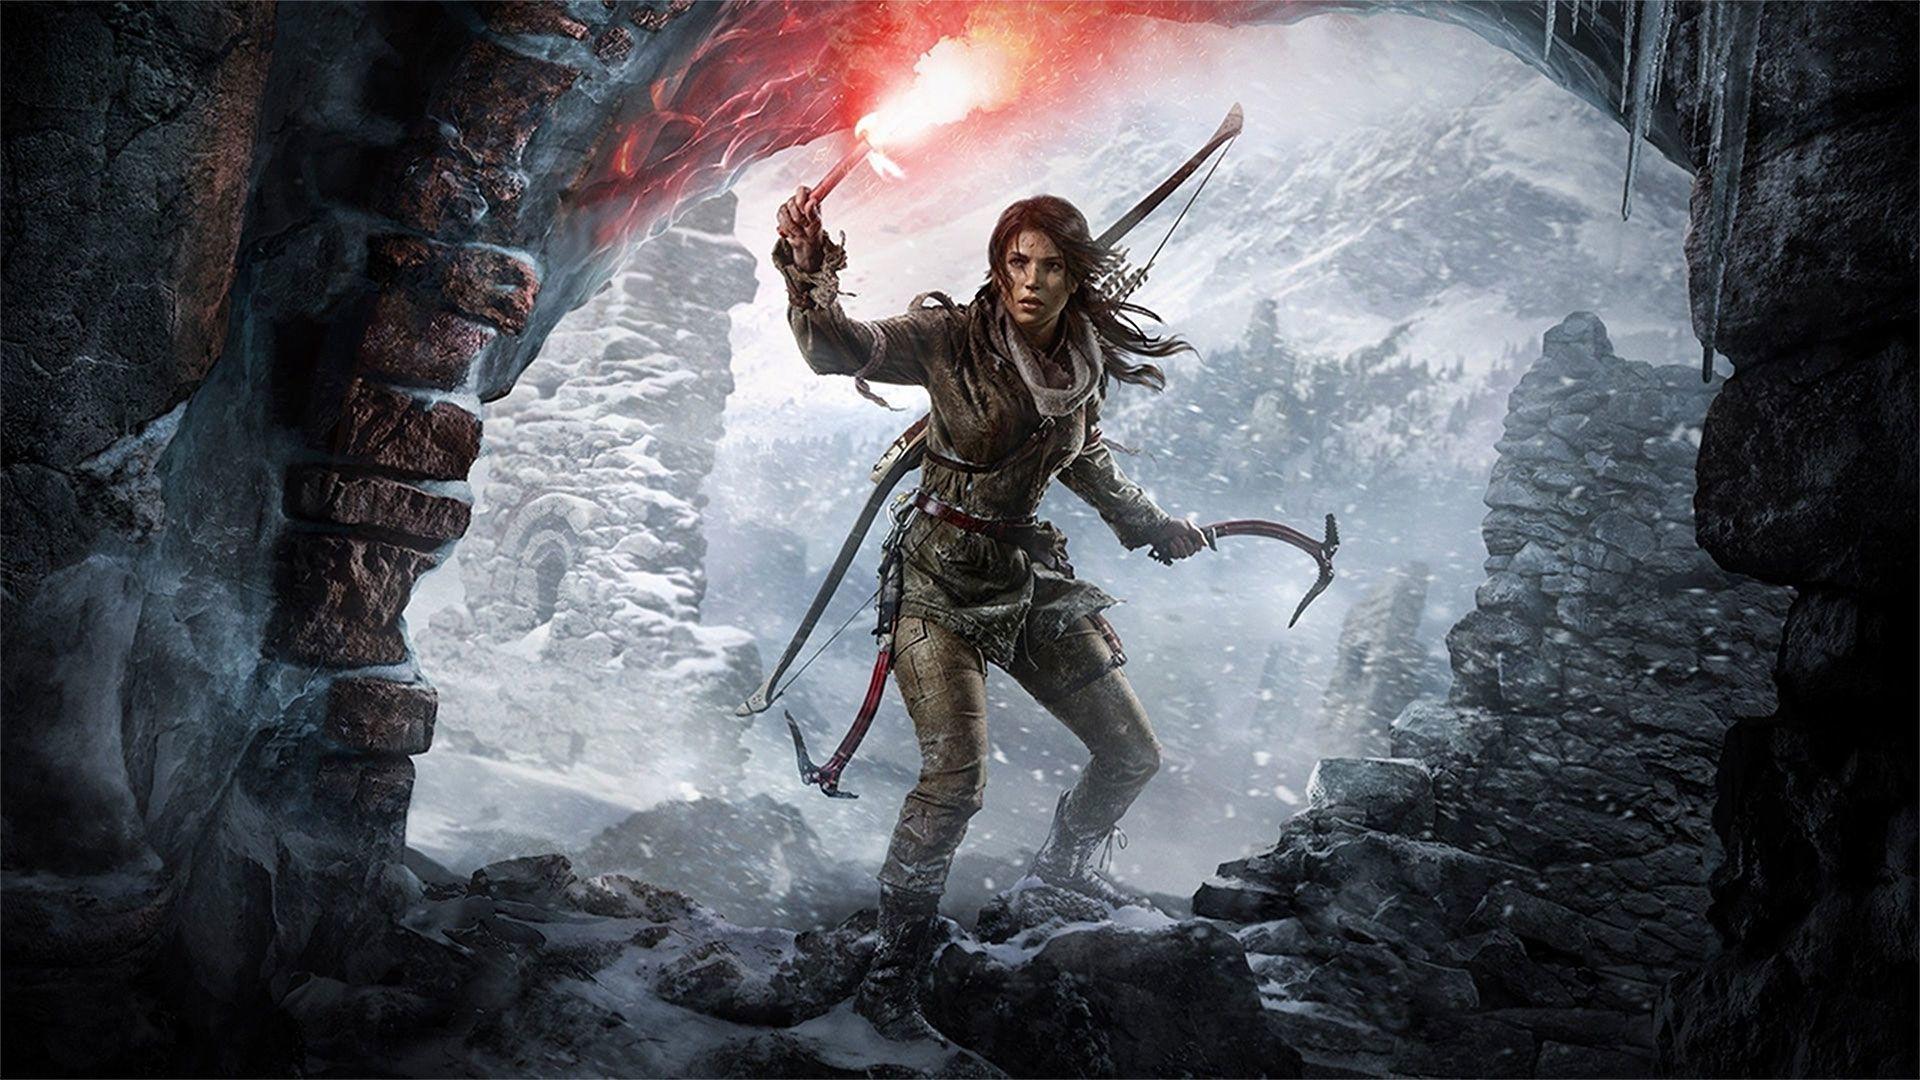 Rise of the Tomb Raider Wallpaper in Ultra HDK